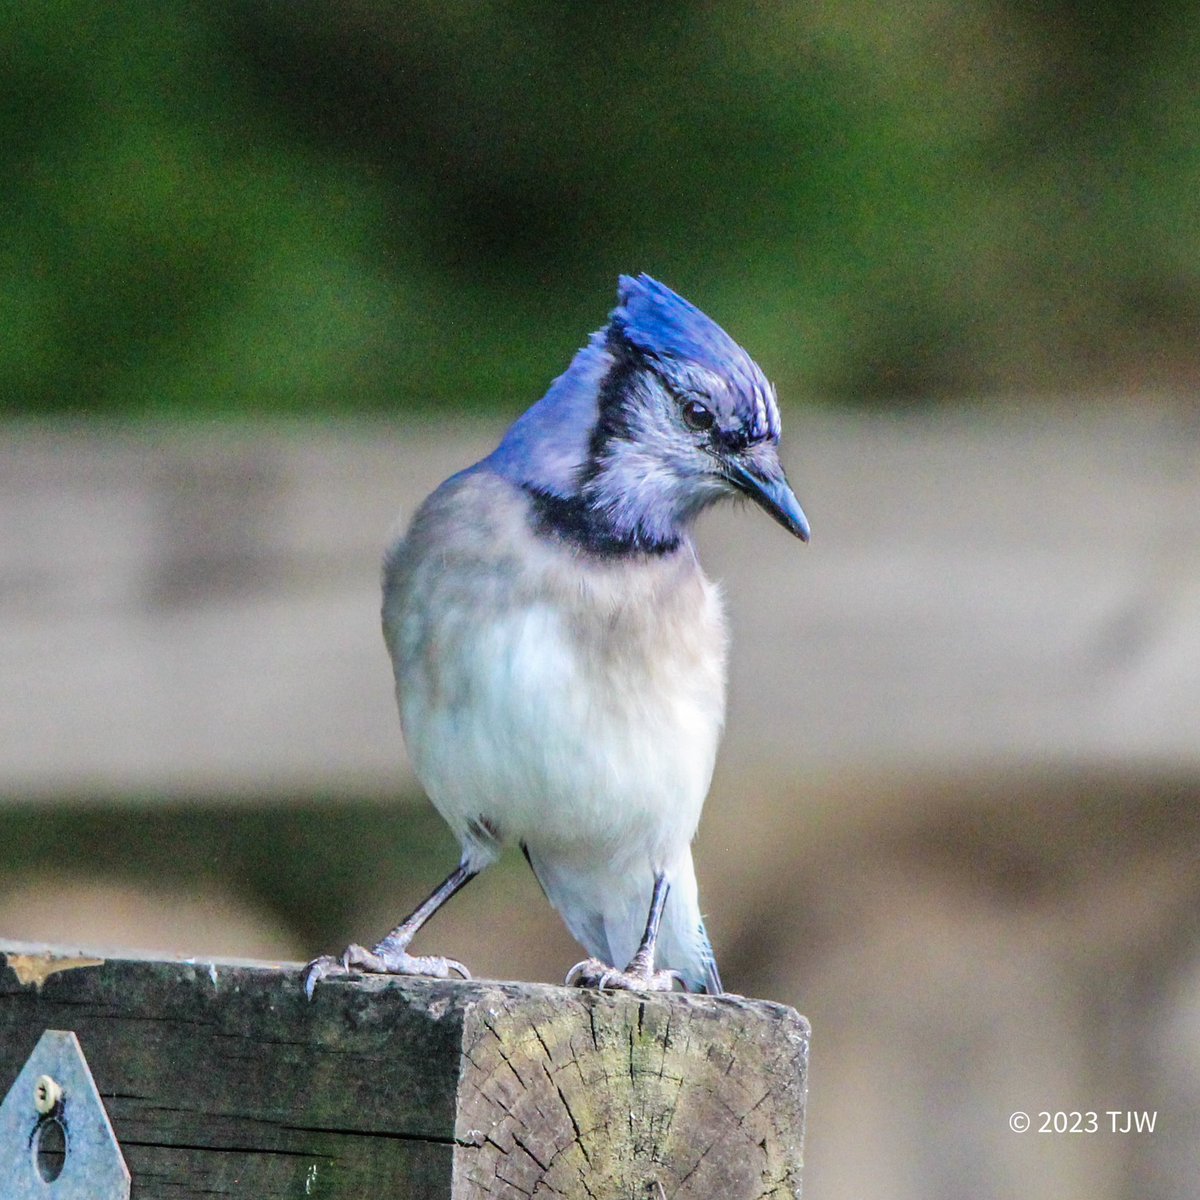 Backyard Blue Jay. He was fast but I finally got his pic. 

#bird #birdphotography #birdwatching #wildlifephotography #wildlife #nature #naturephotography #naturelovers #bluejays #photography #birds #georgia #backyardwildlife #backyard